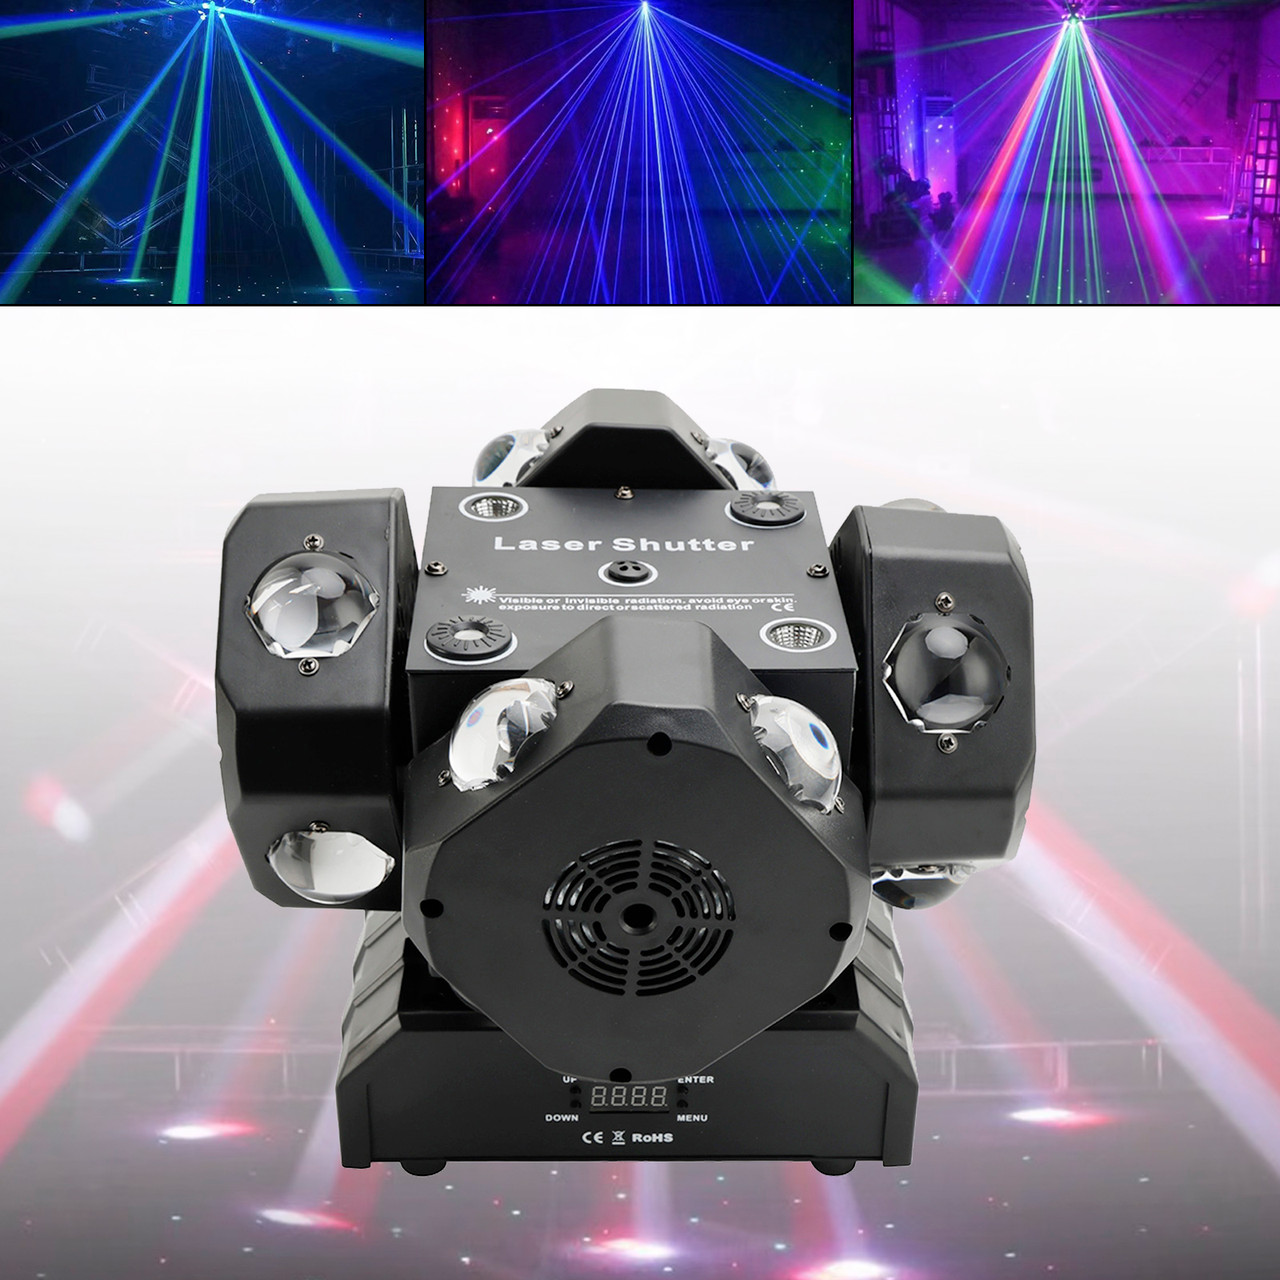 200W 16 LED Laser Moving Head RGBW Stage Light DMX Spotlight Lighting Effect